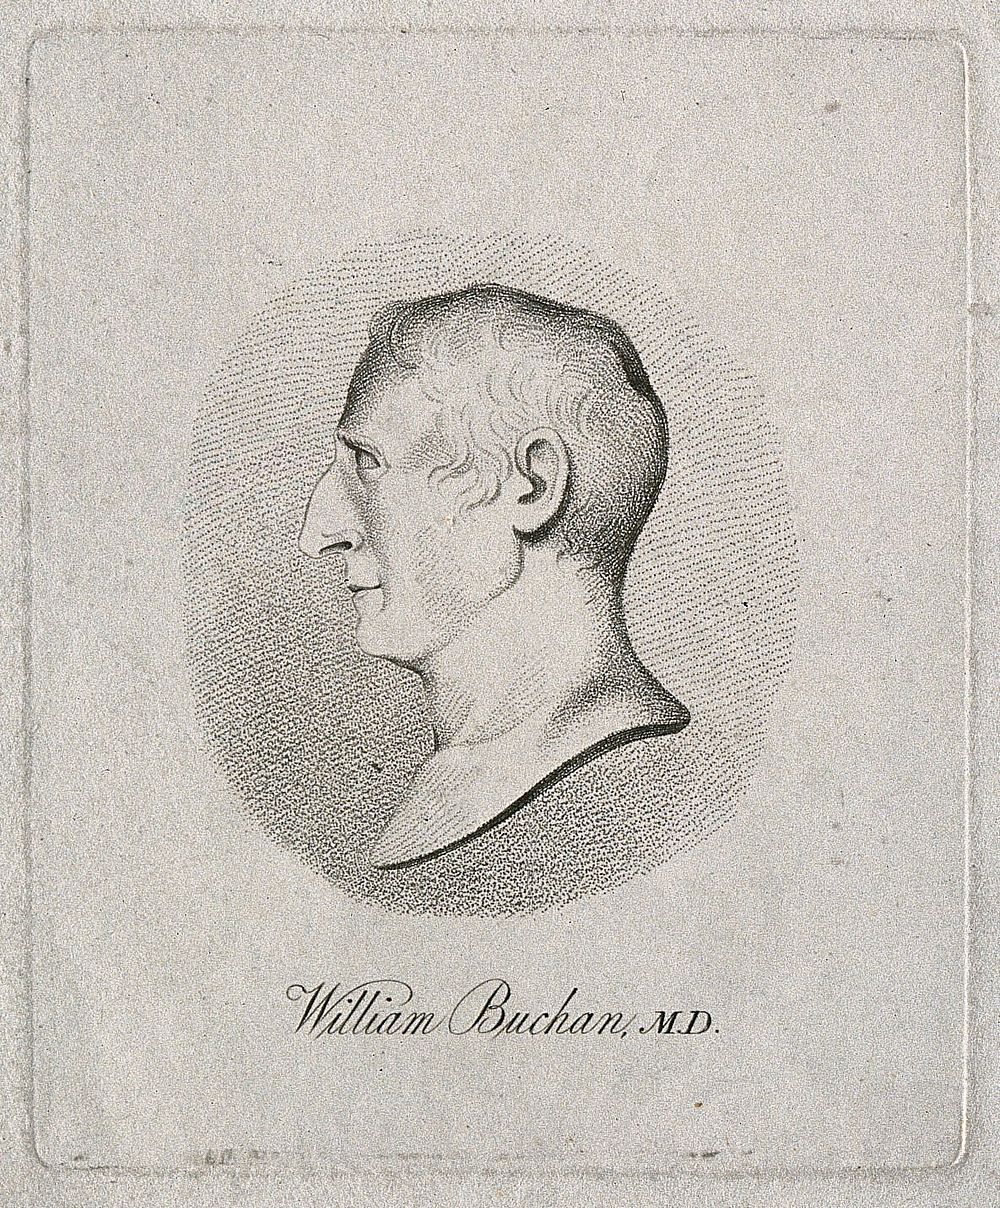 William Buchan. Stipple engraving.